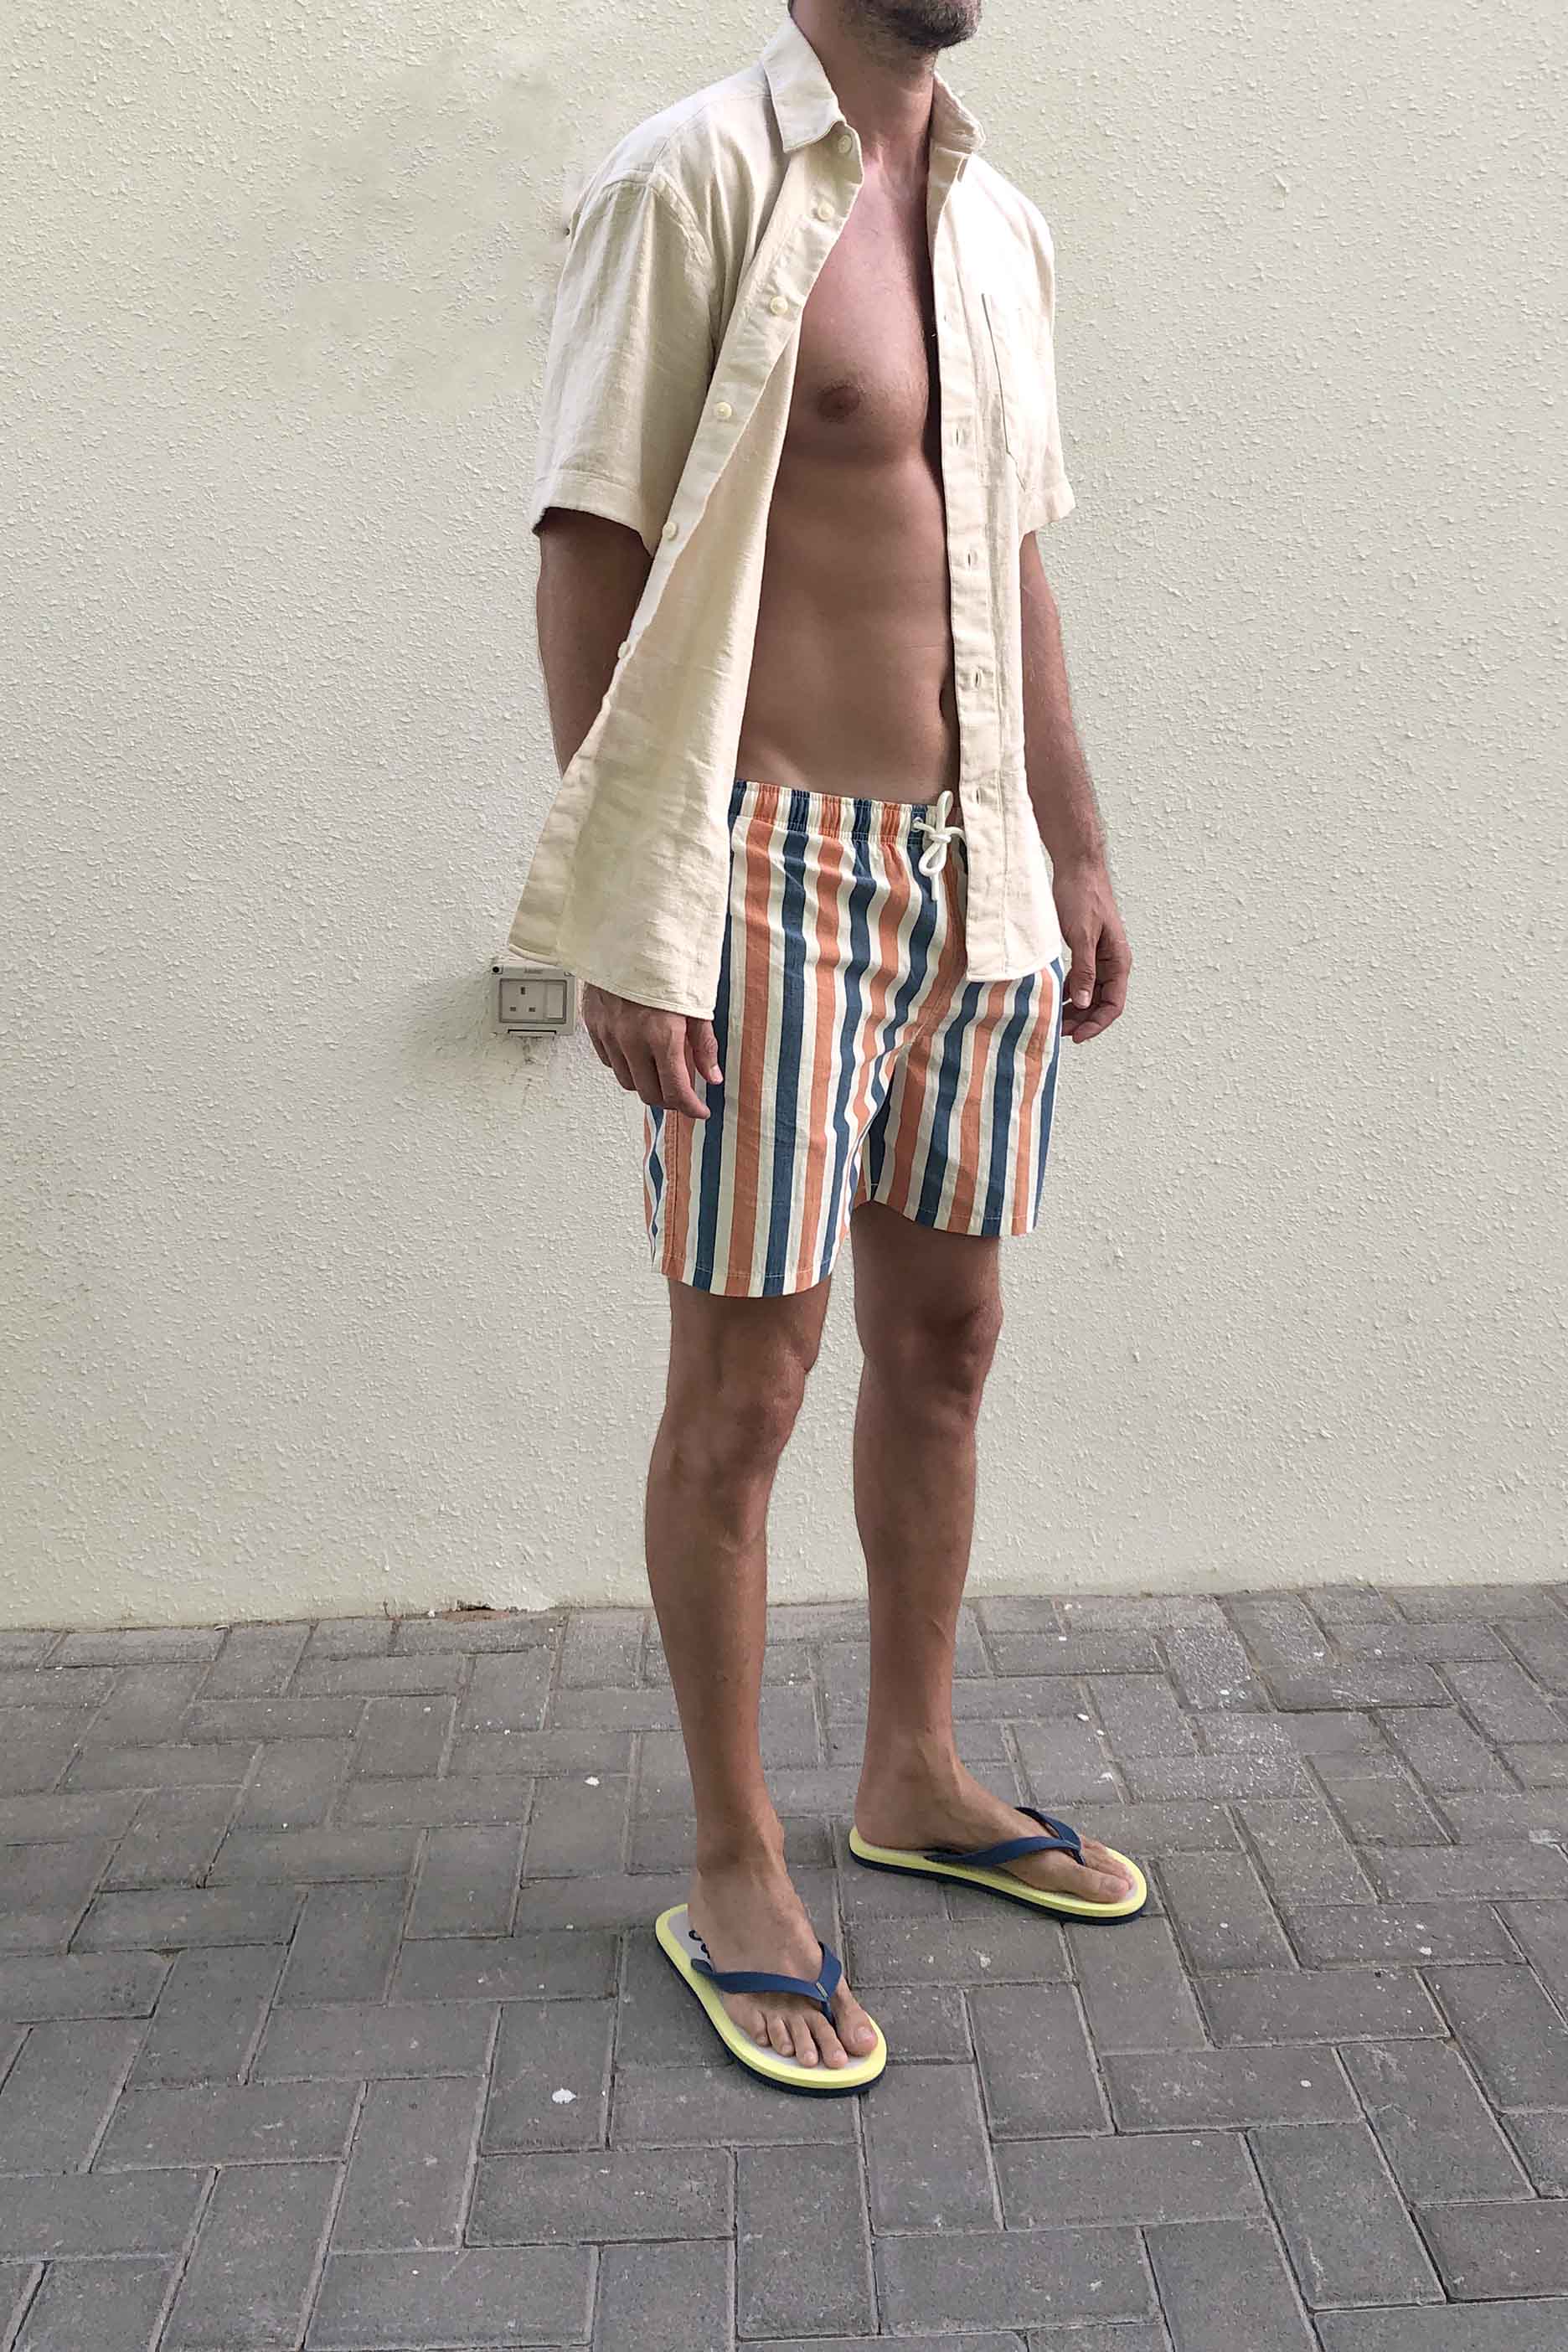 Stripe Swim Shorts (Medium)